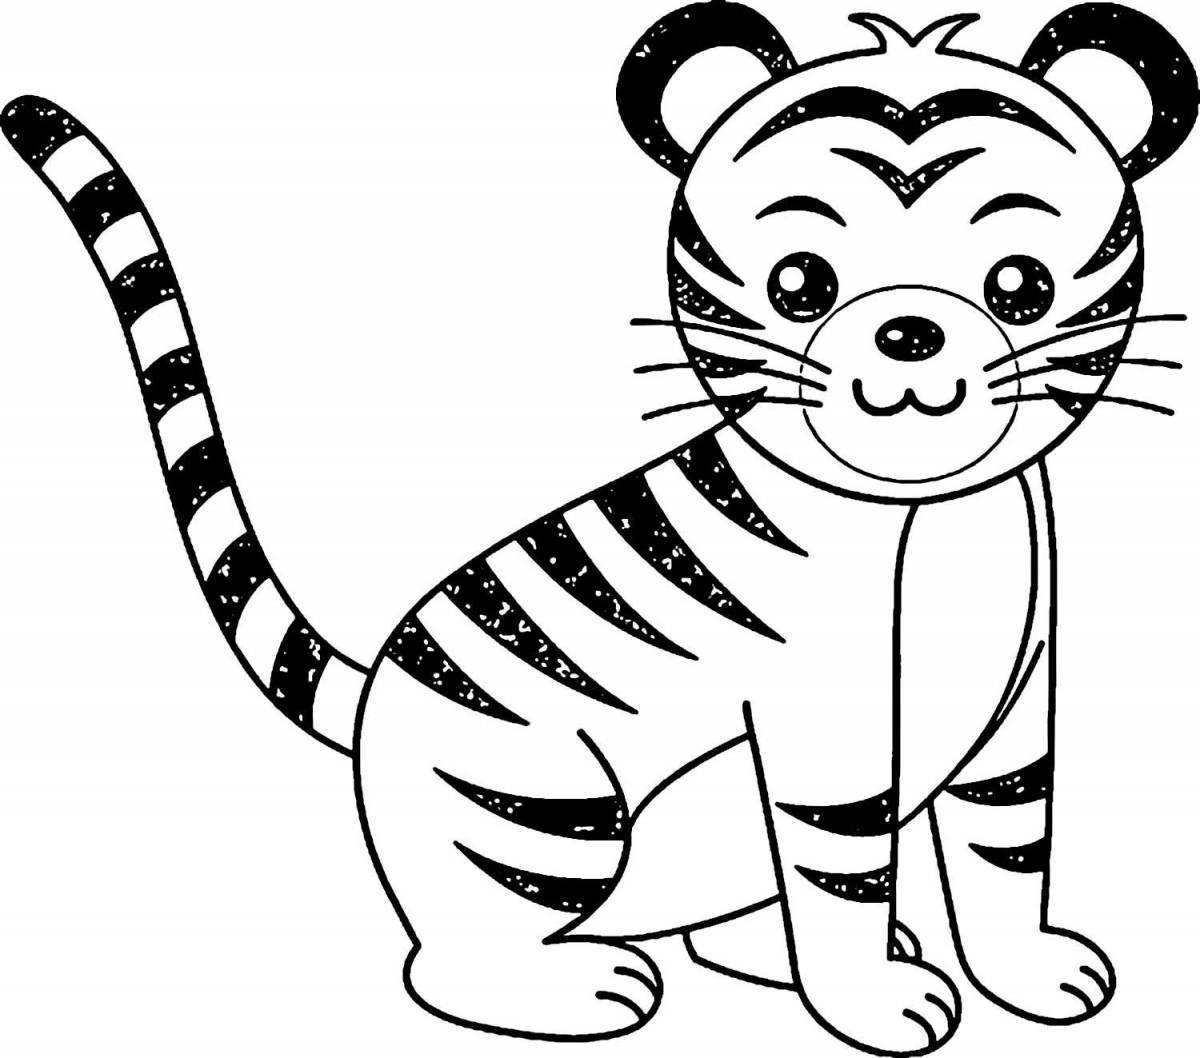 Live new year tiger cub